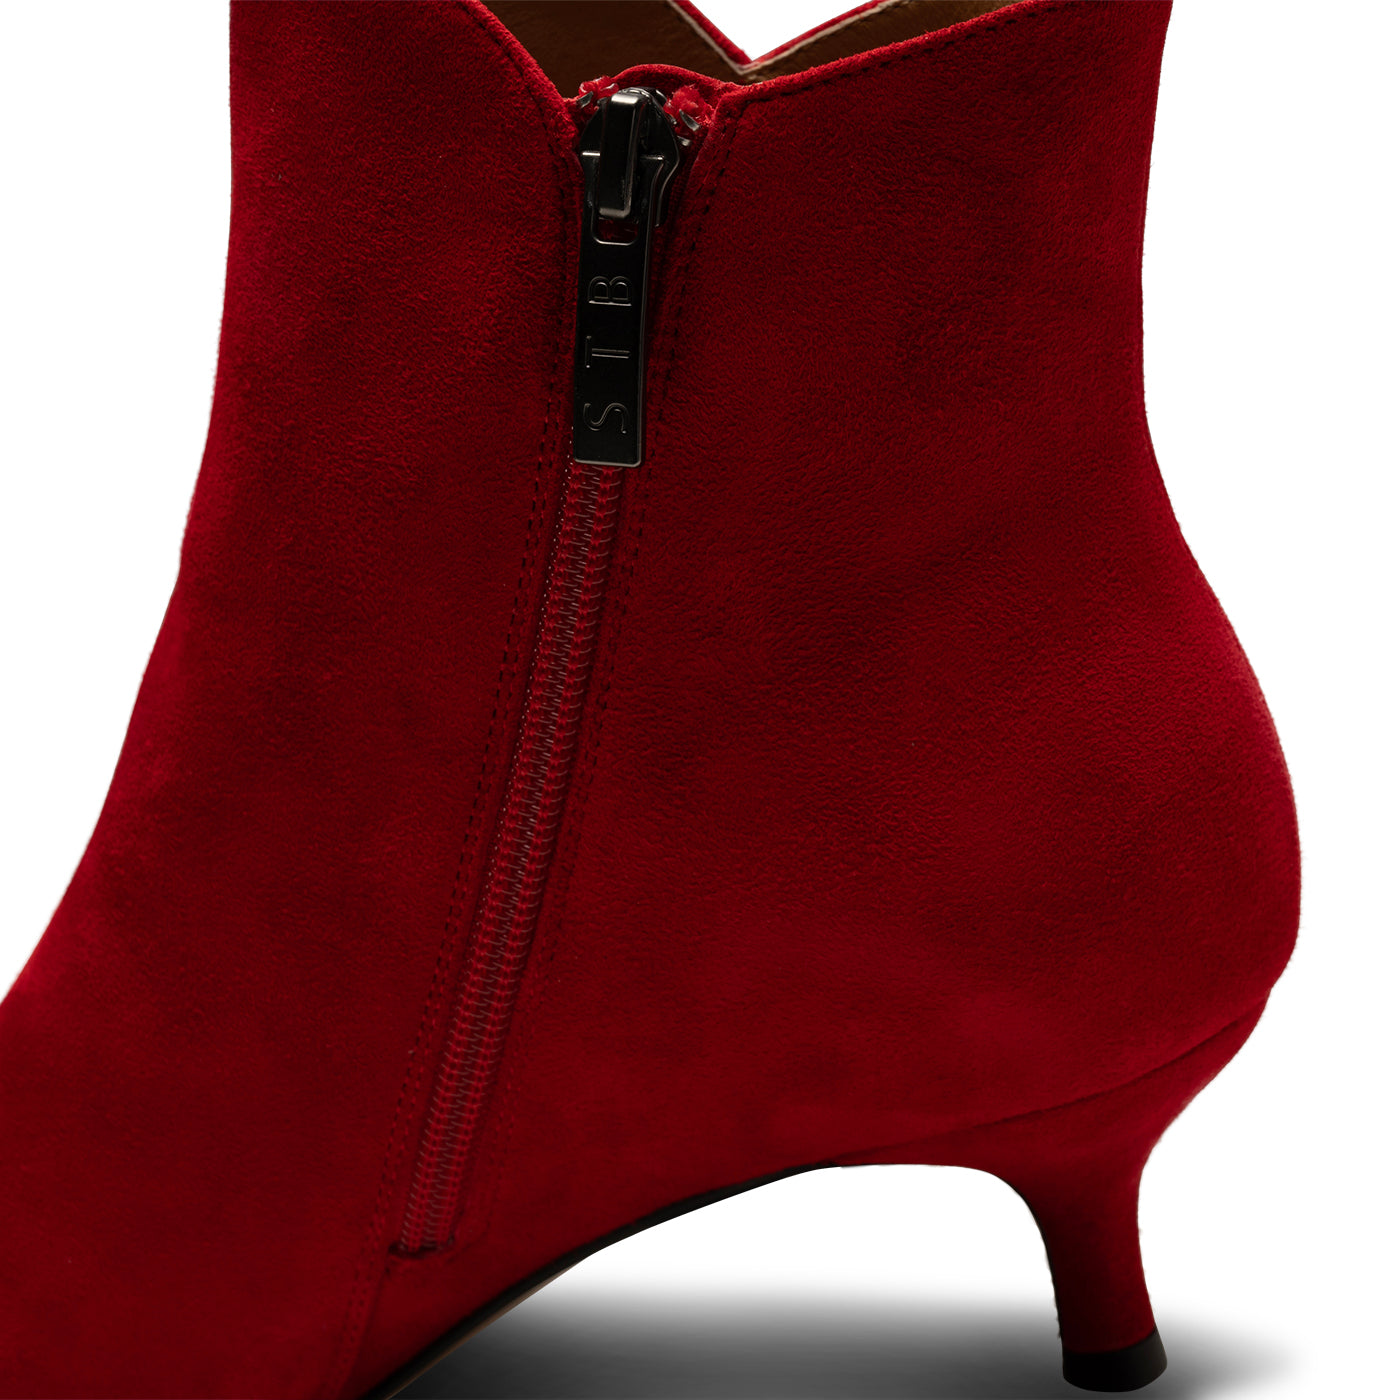 SHOE THE BEAR WOMENS Saga støvle ruskind Heels 123 Fire Red